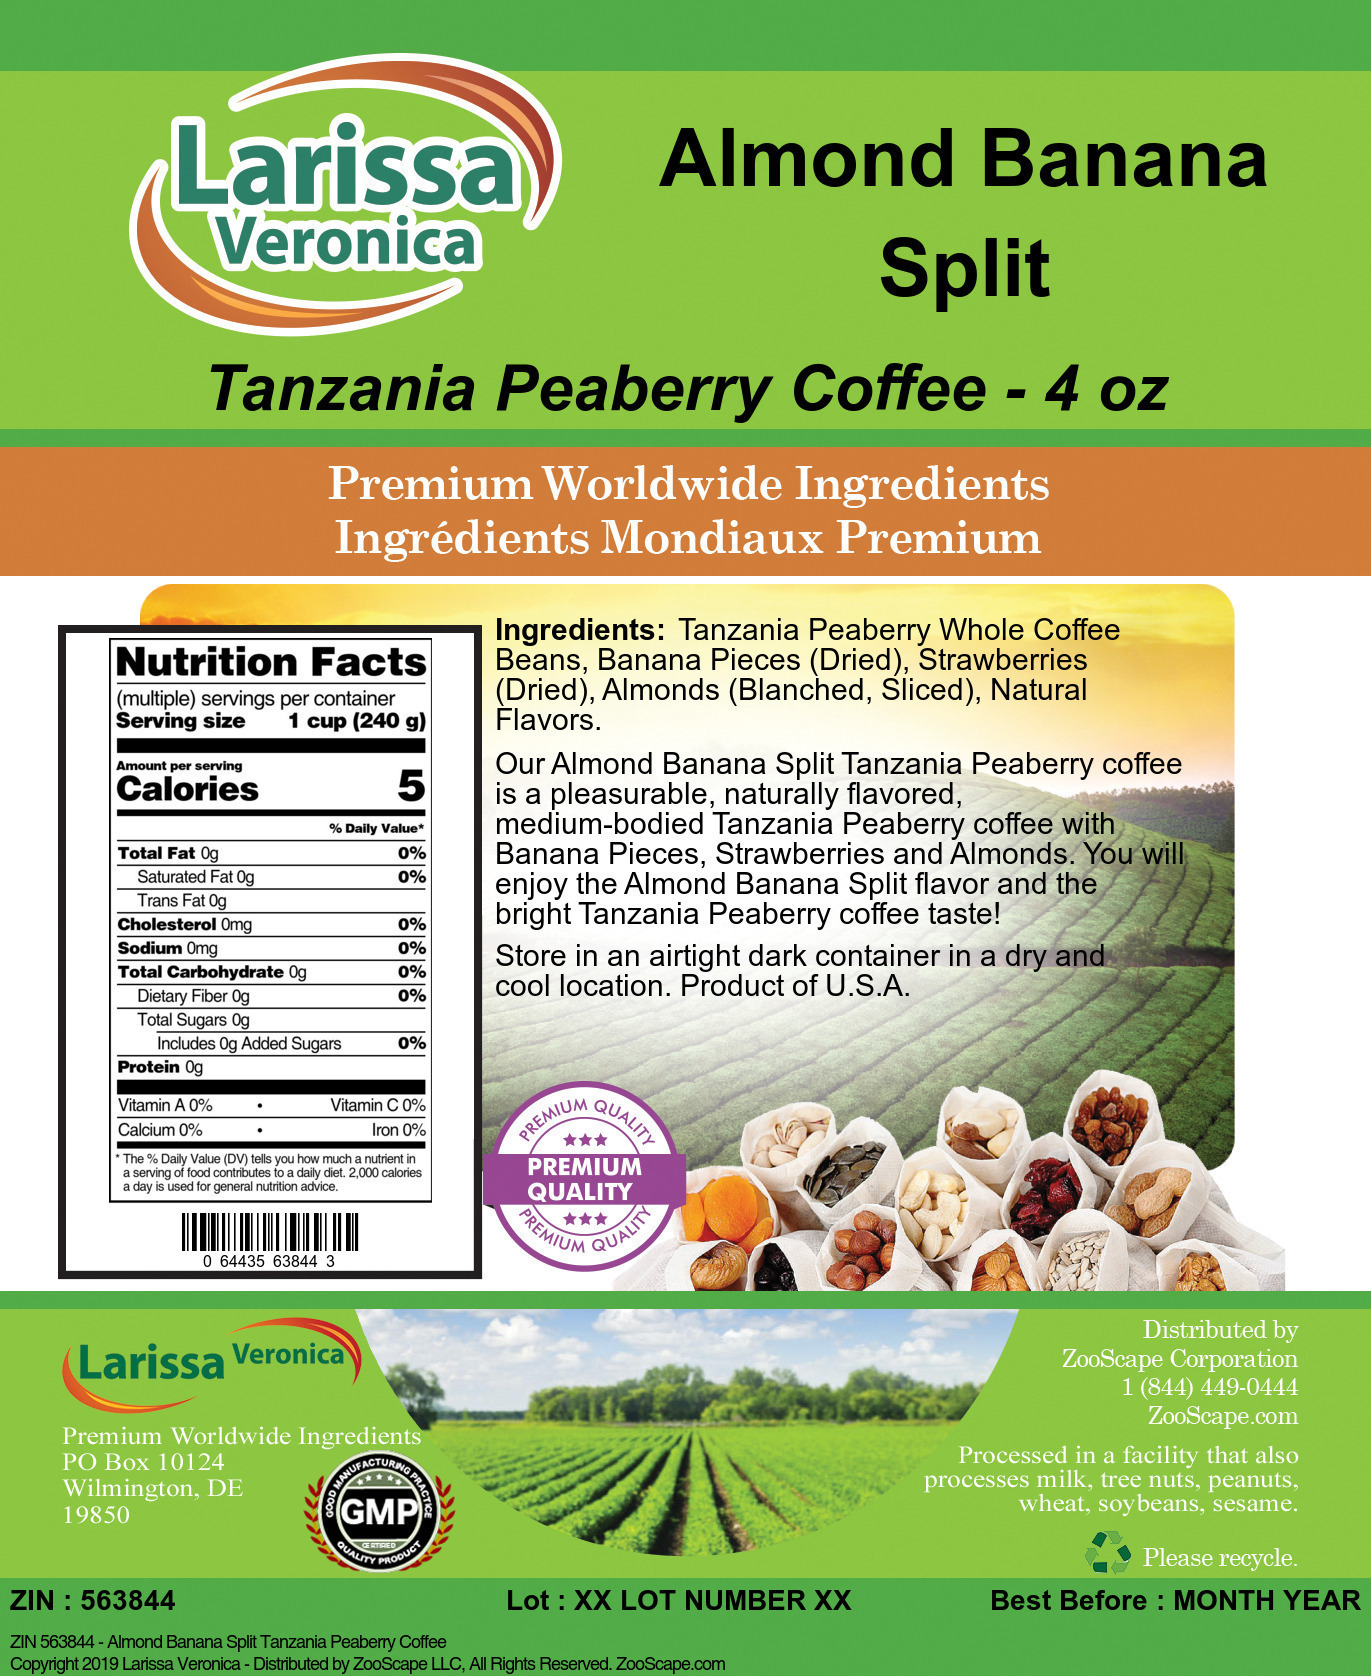 Almond Banana Split Tanzania Peaberry Coffee - Label